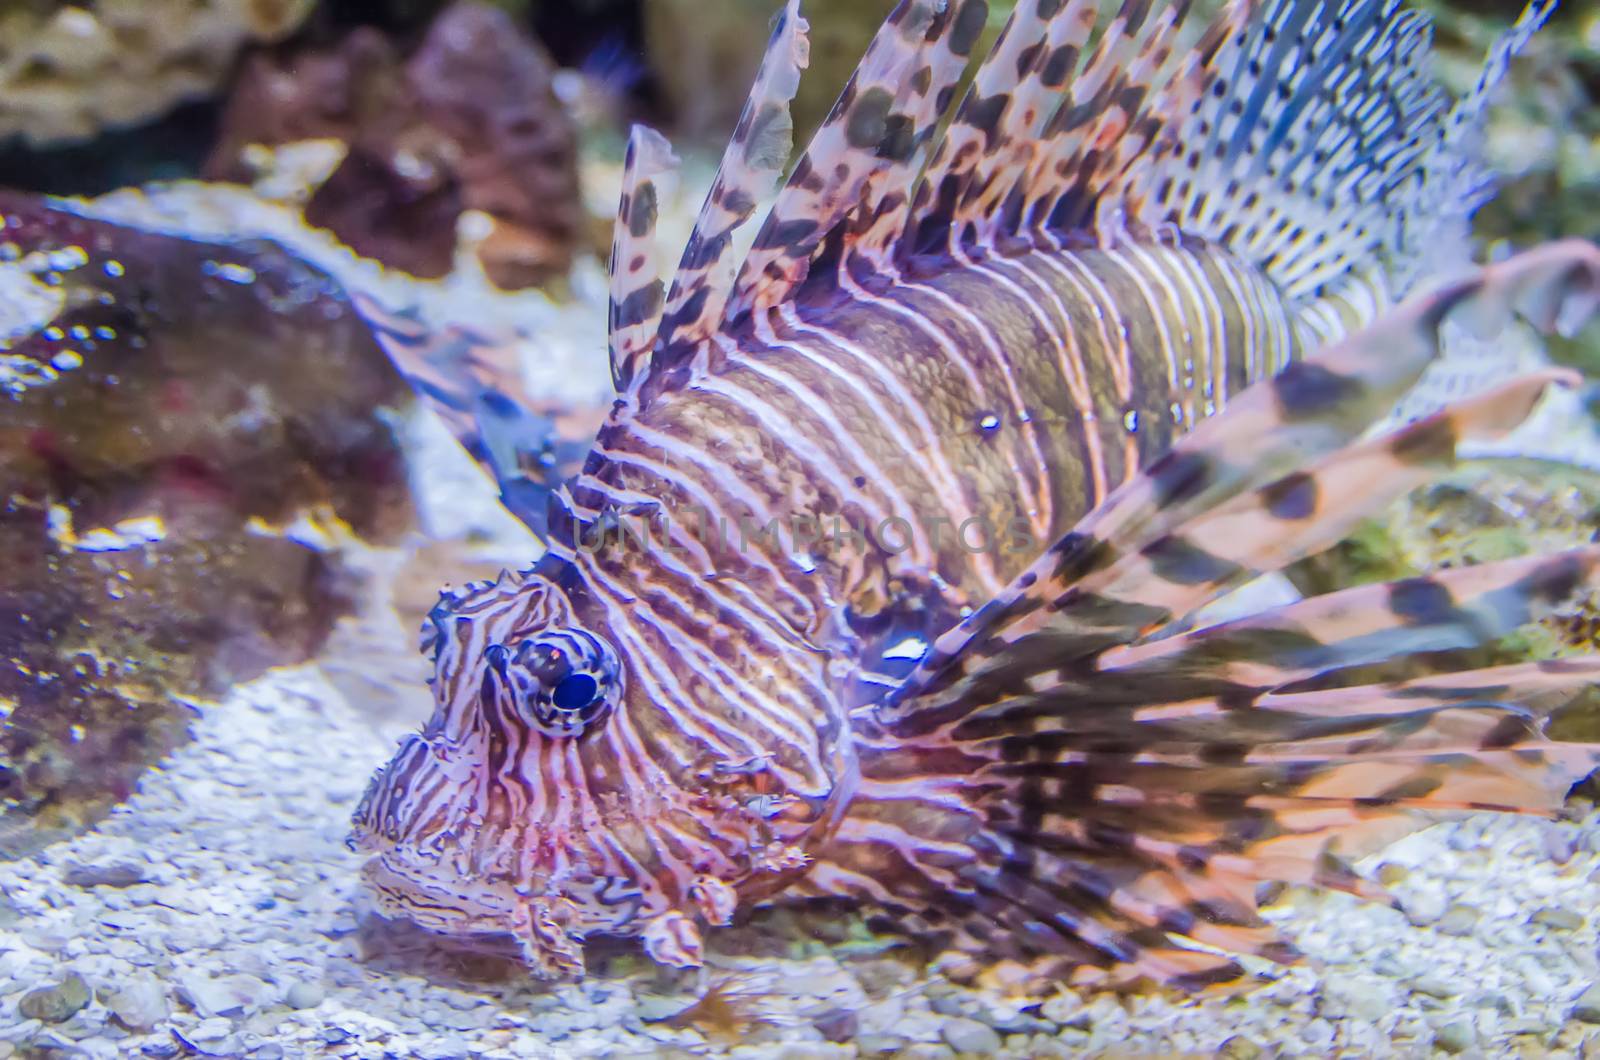 poisonous exotic zebra striped lion fish  by digidreamgrafix